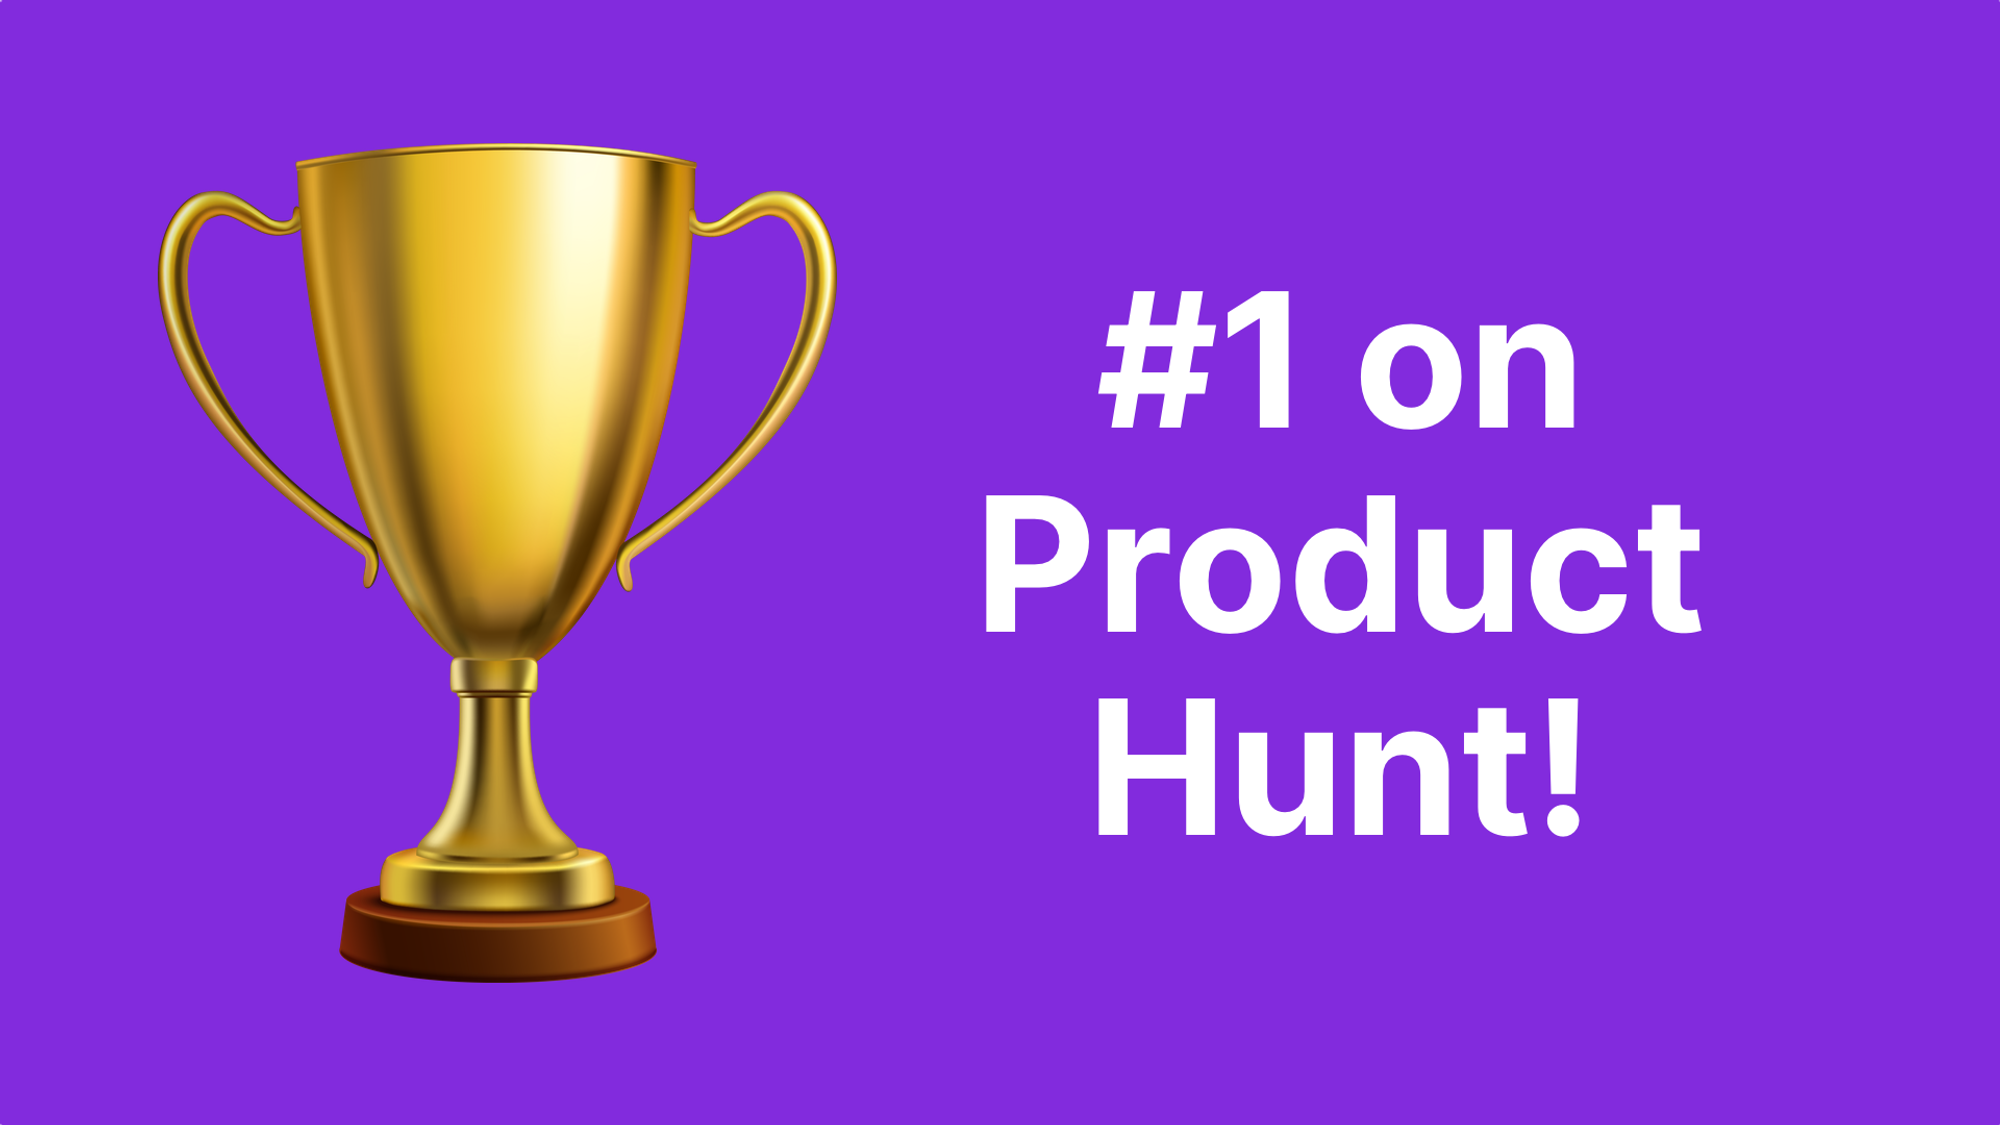 How I got #1 on Product Hunt